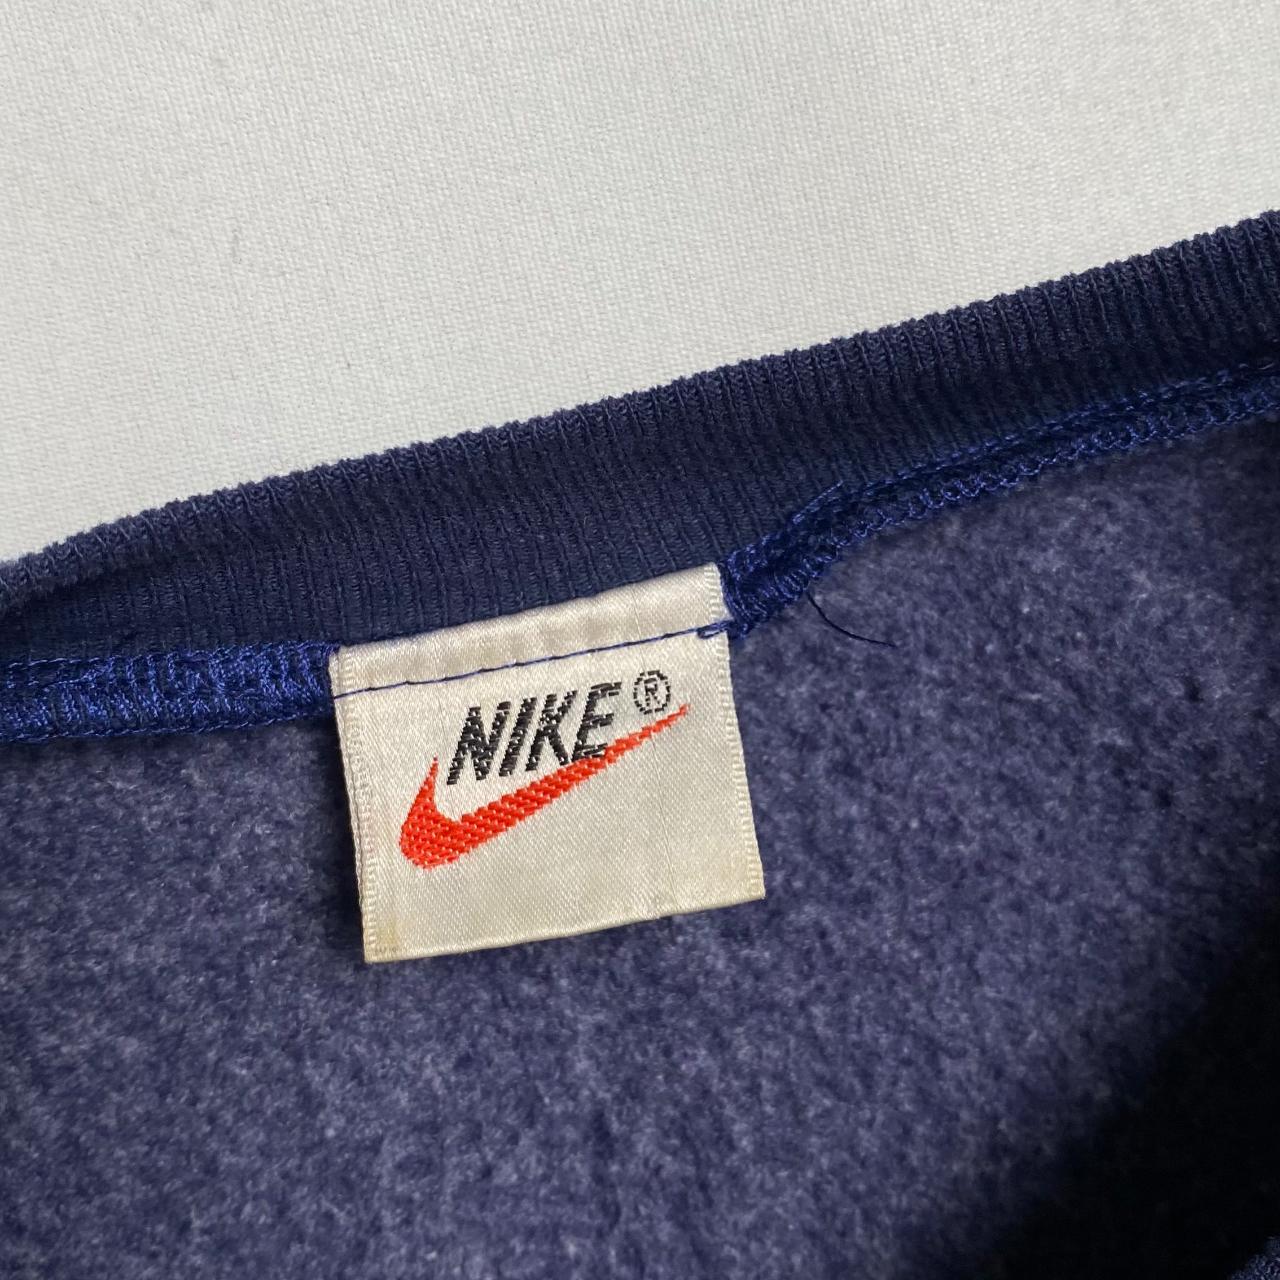 Authentic Vintage Nike Early 90's Sweatshirt  (S)